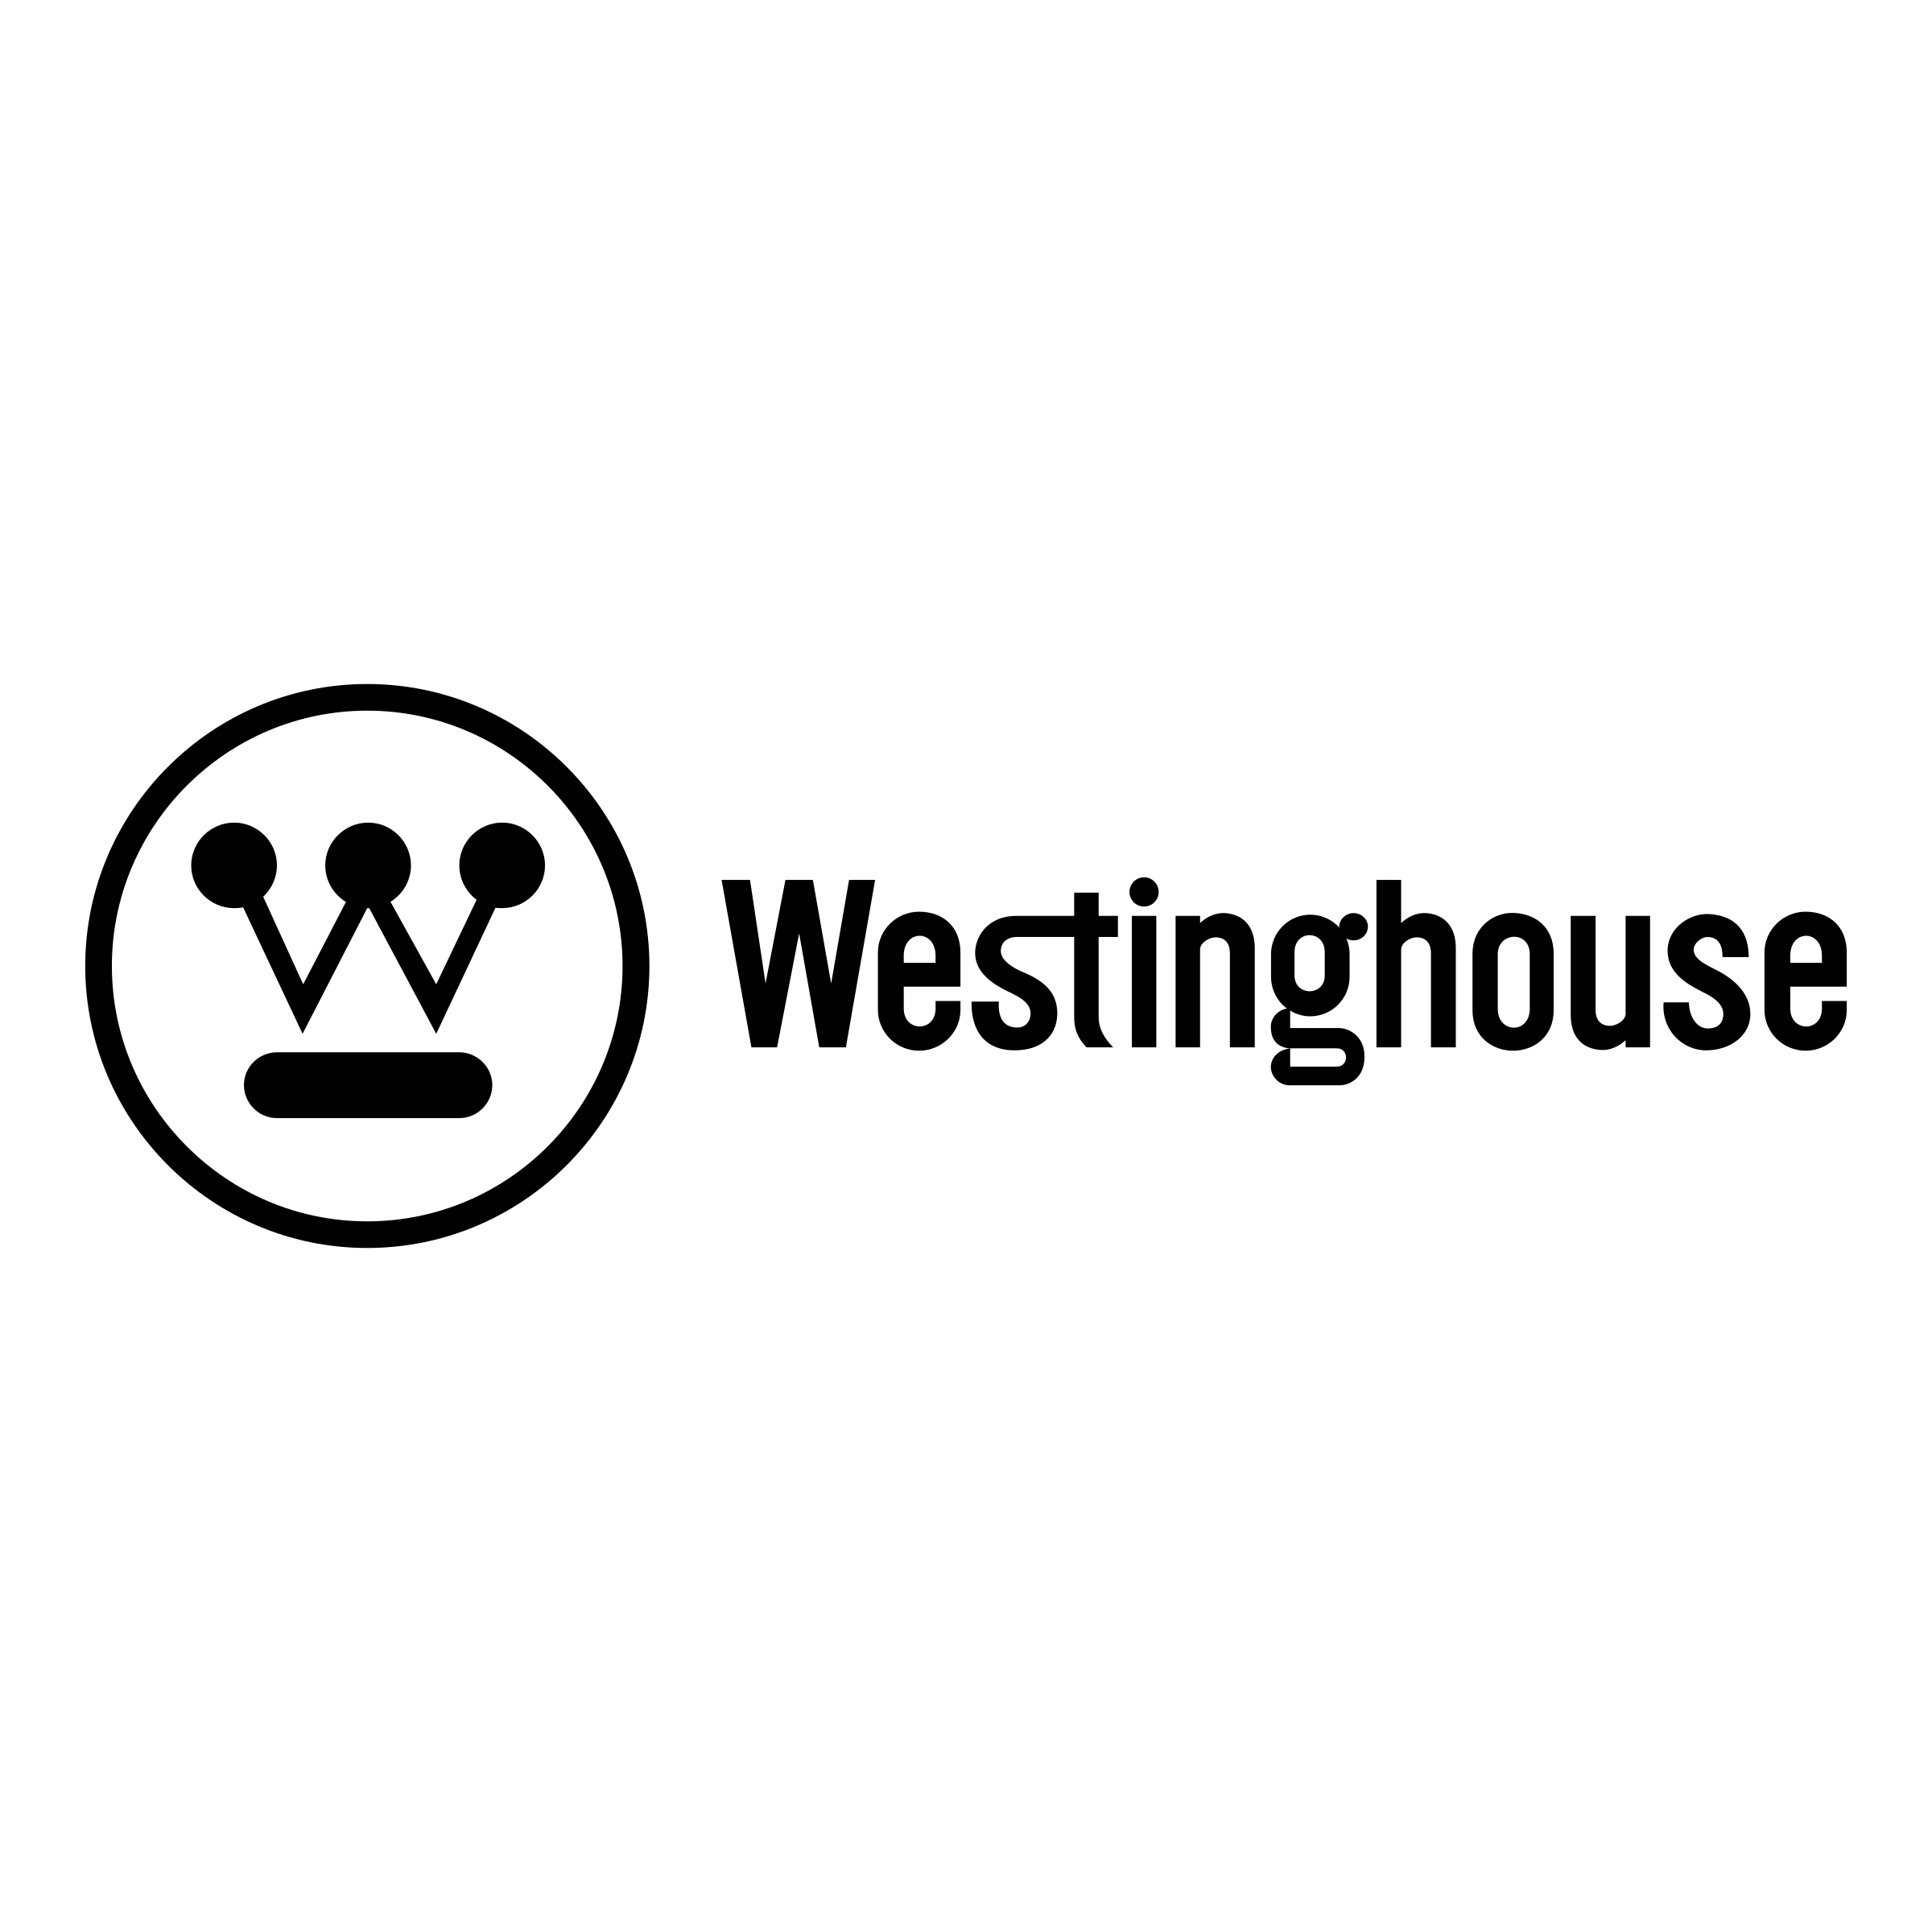 Westinghouse – Logos, Brand